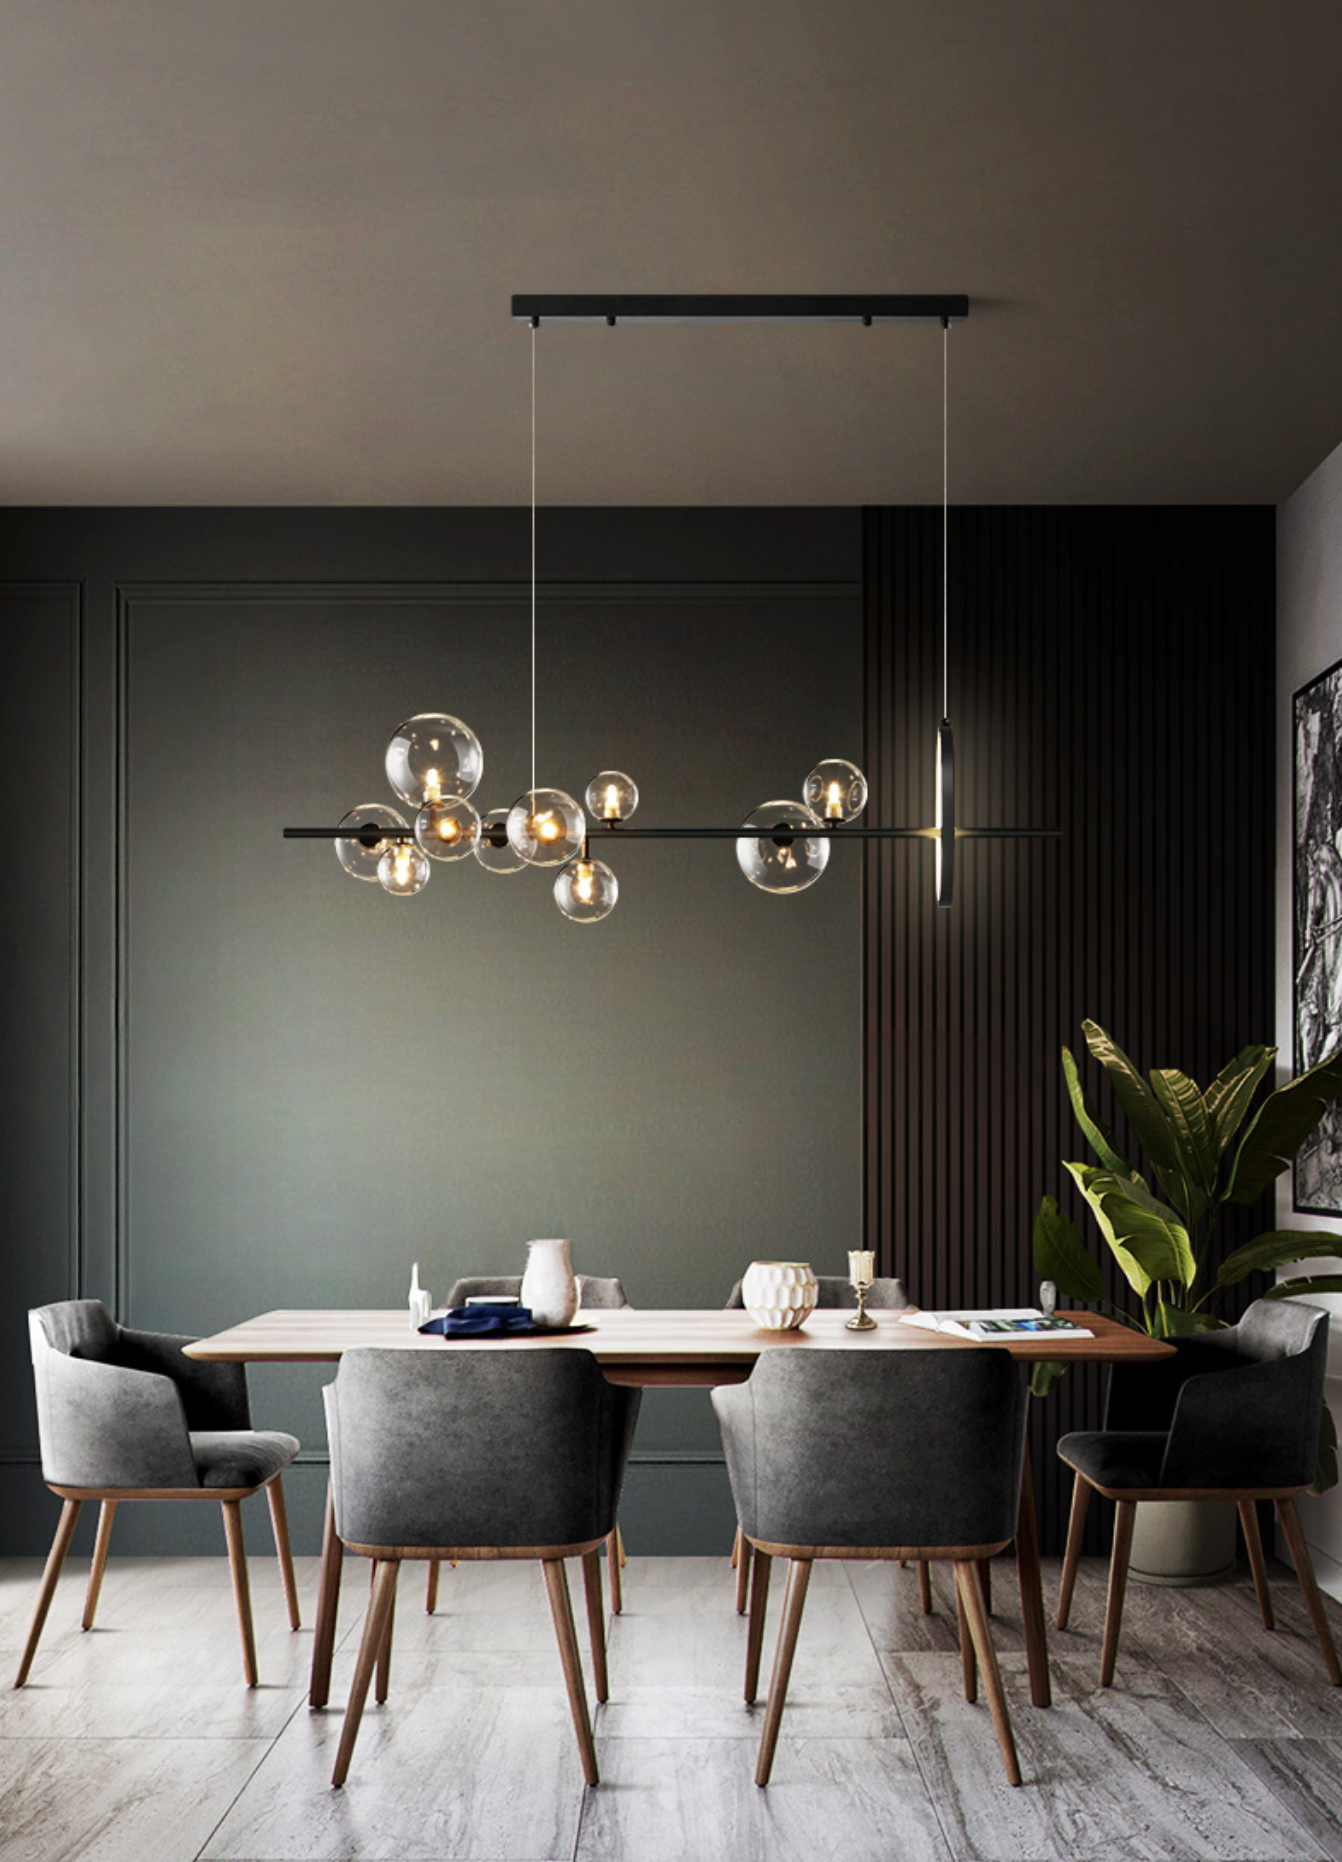 Soho modern luxury kitchen island pendant Light luxury meeting room setting